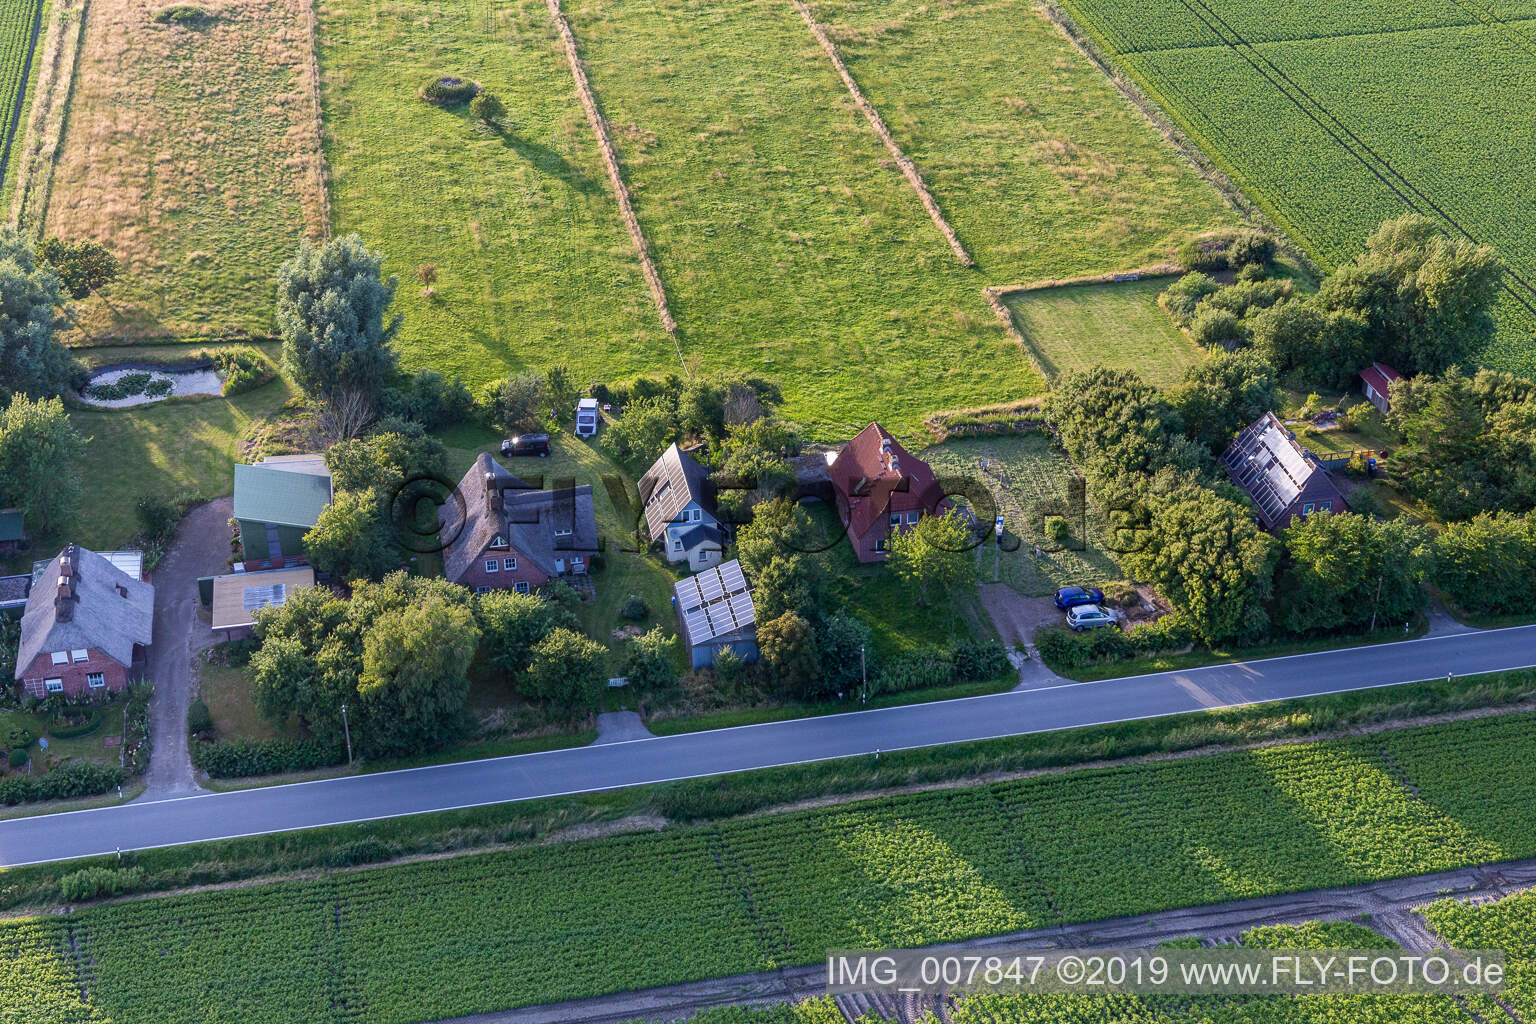 Drone image of Schülpersieler Straße in Wesselburenerkoog in the state Schleswig Holstein, Germany